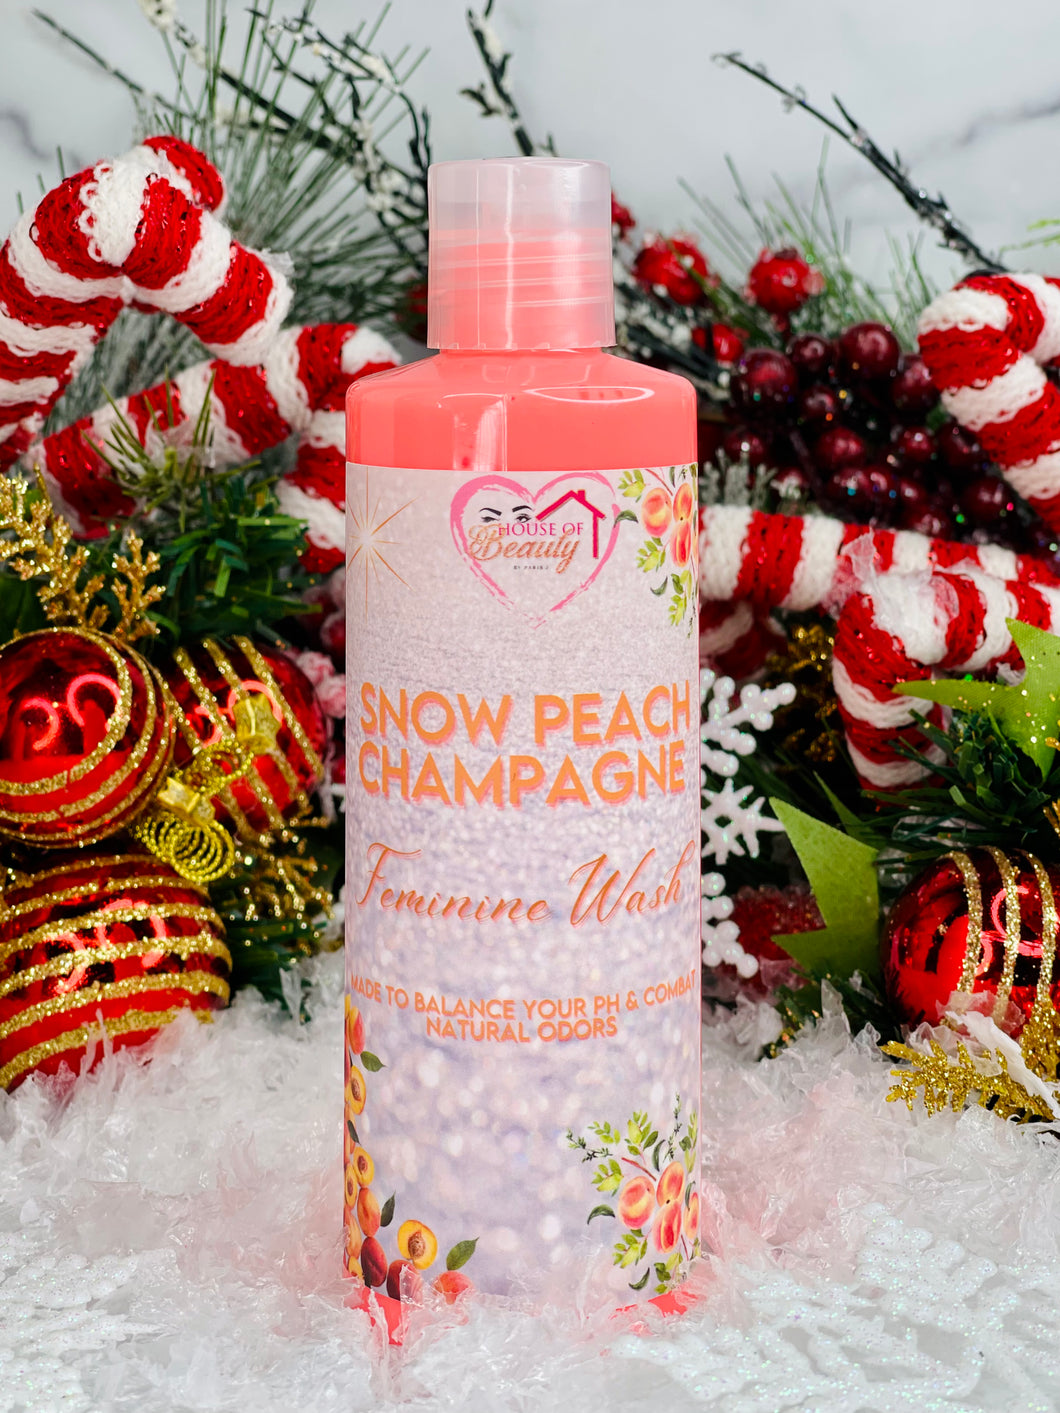 Snow Peach Champagne Feminine Wash